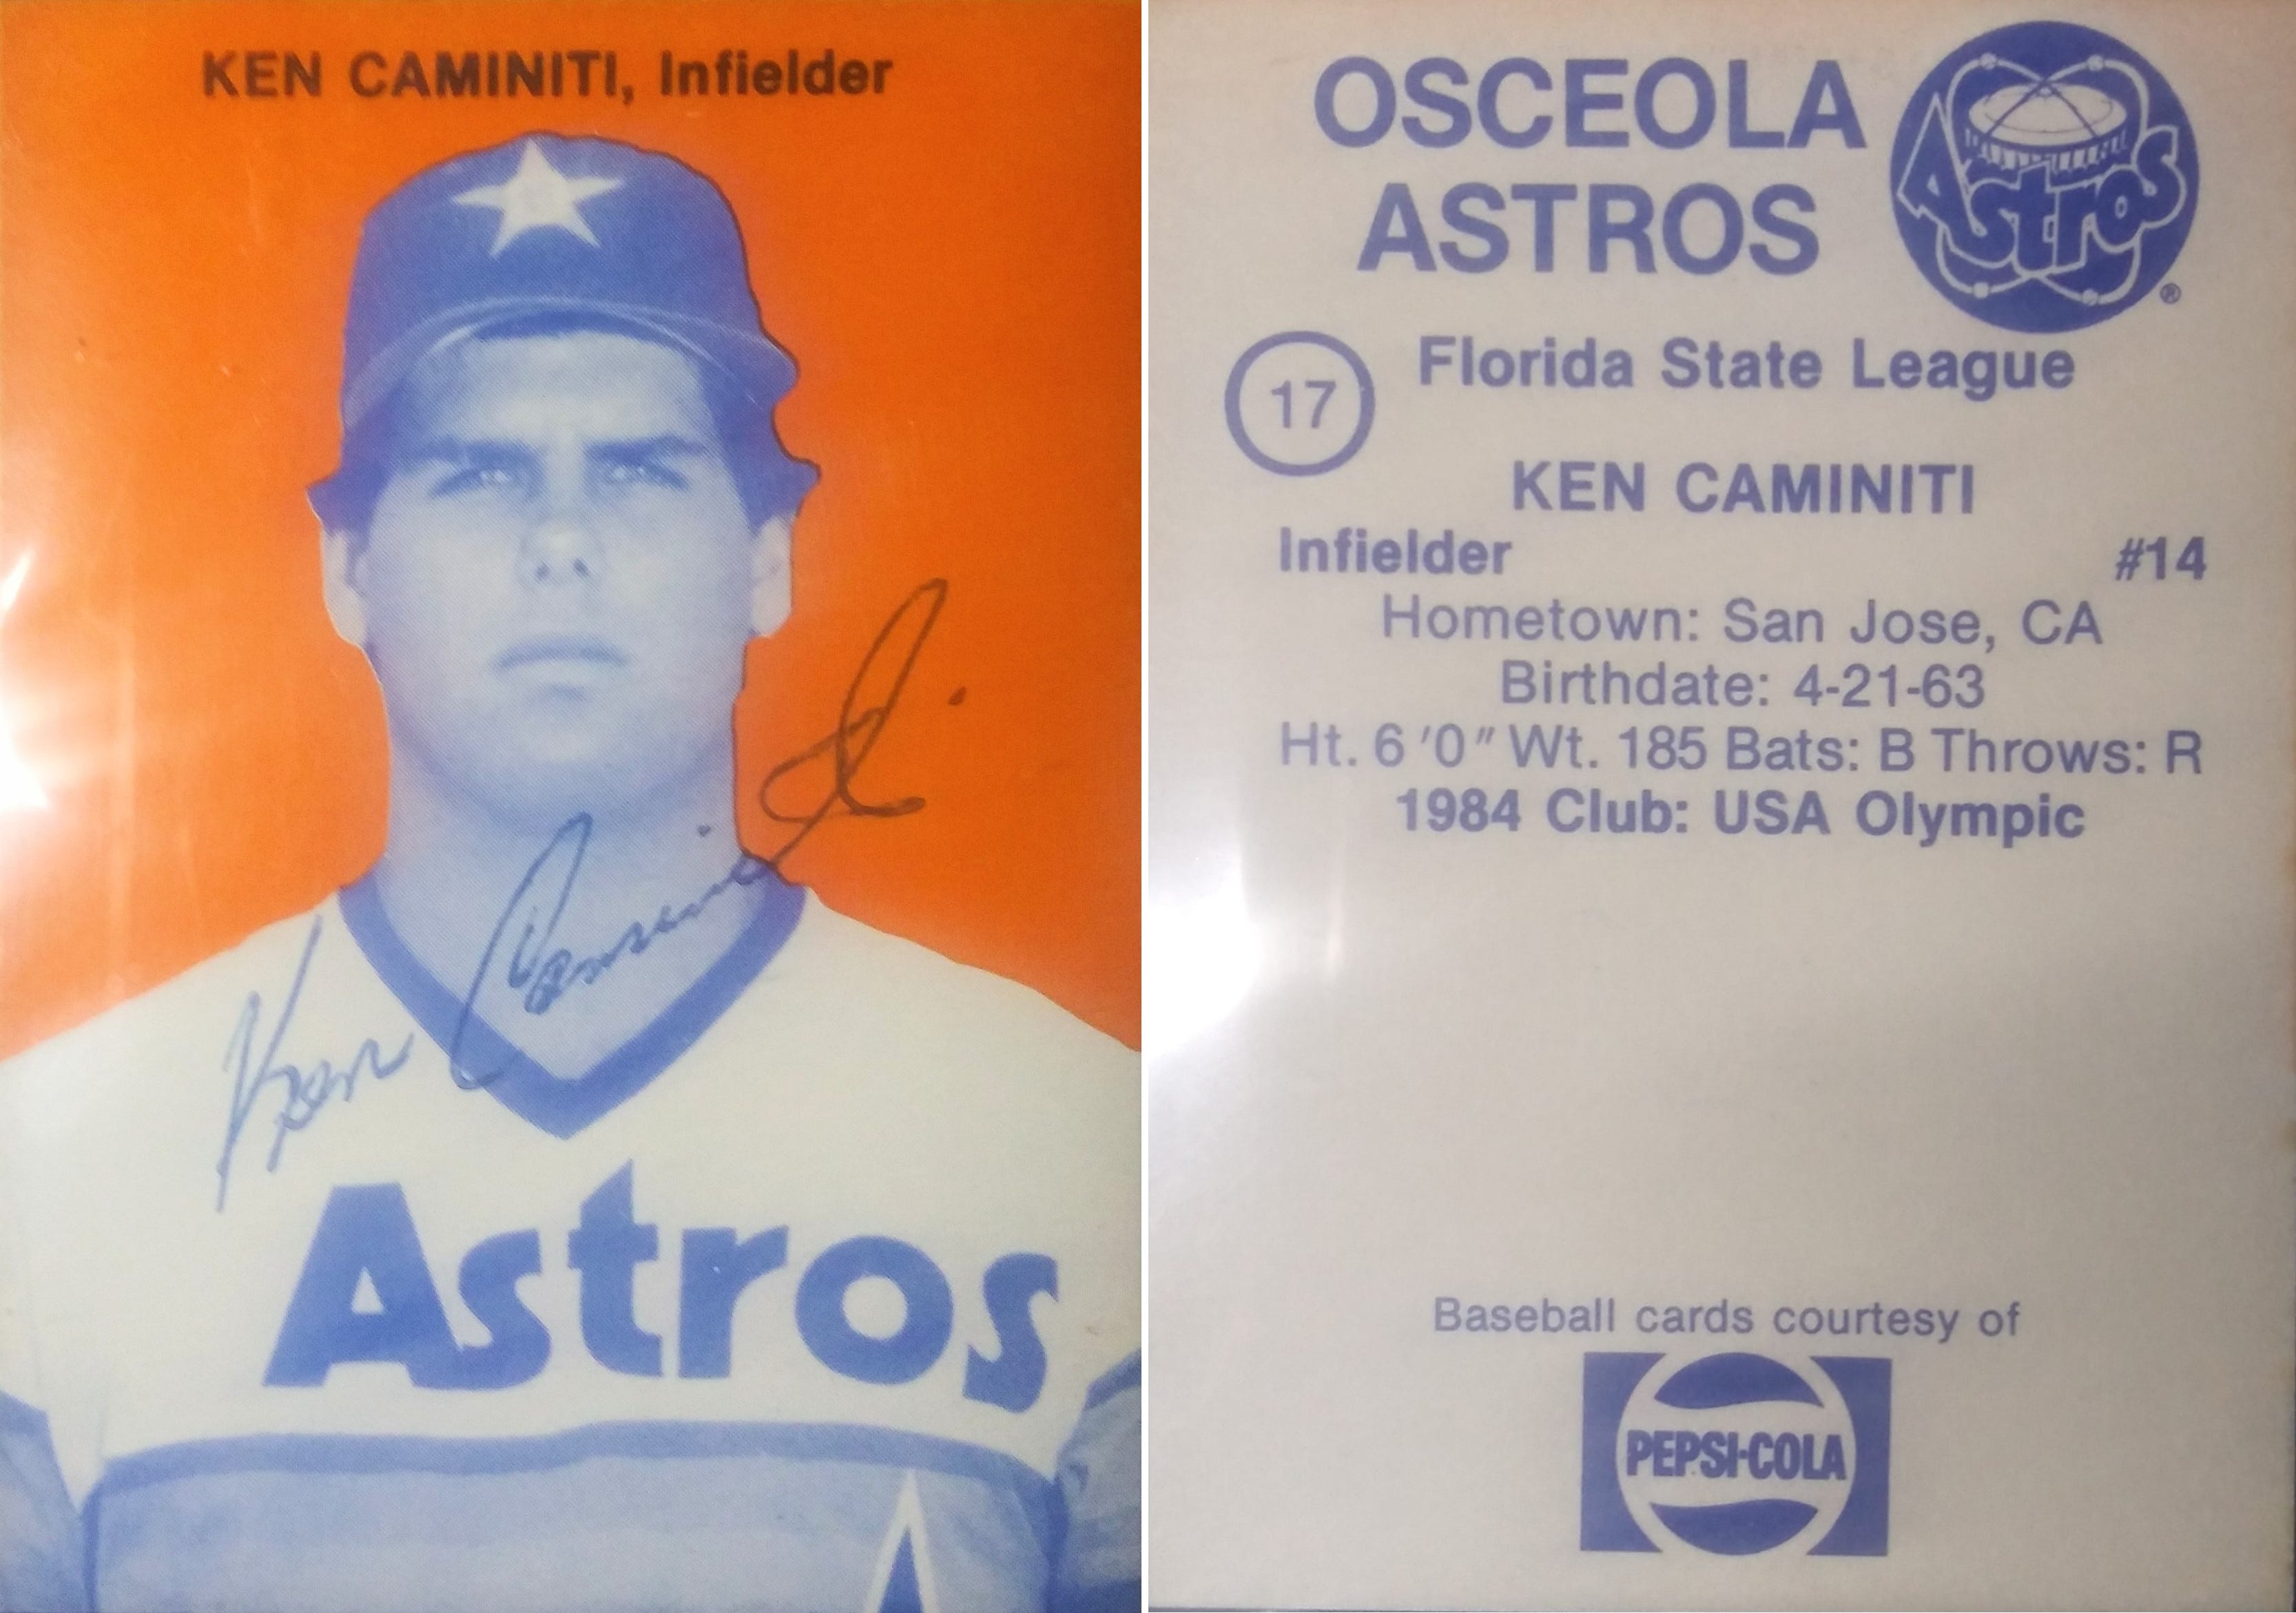 1993 Triple Play Ken Caminiti Houston Astros #61 Baseball card CBT1A